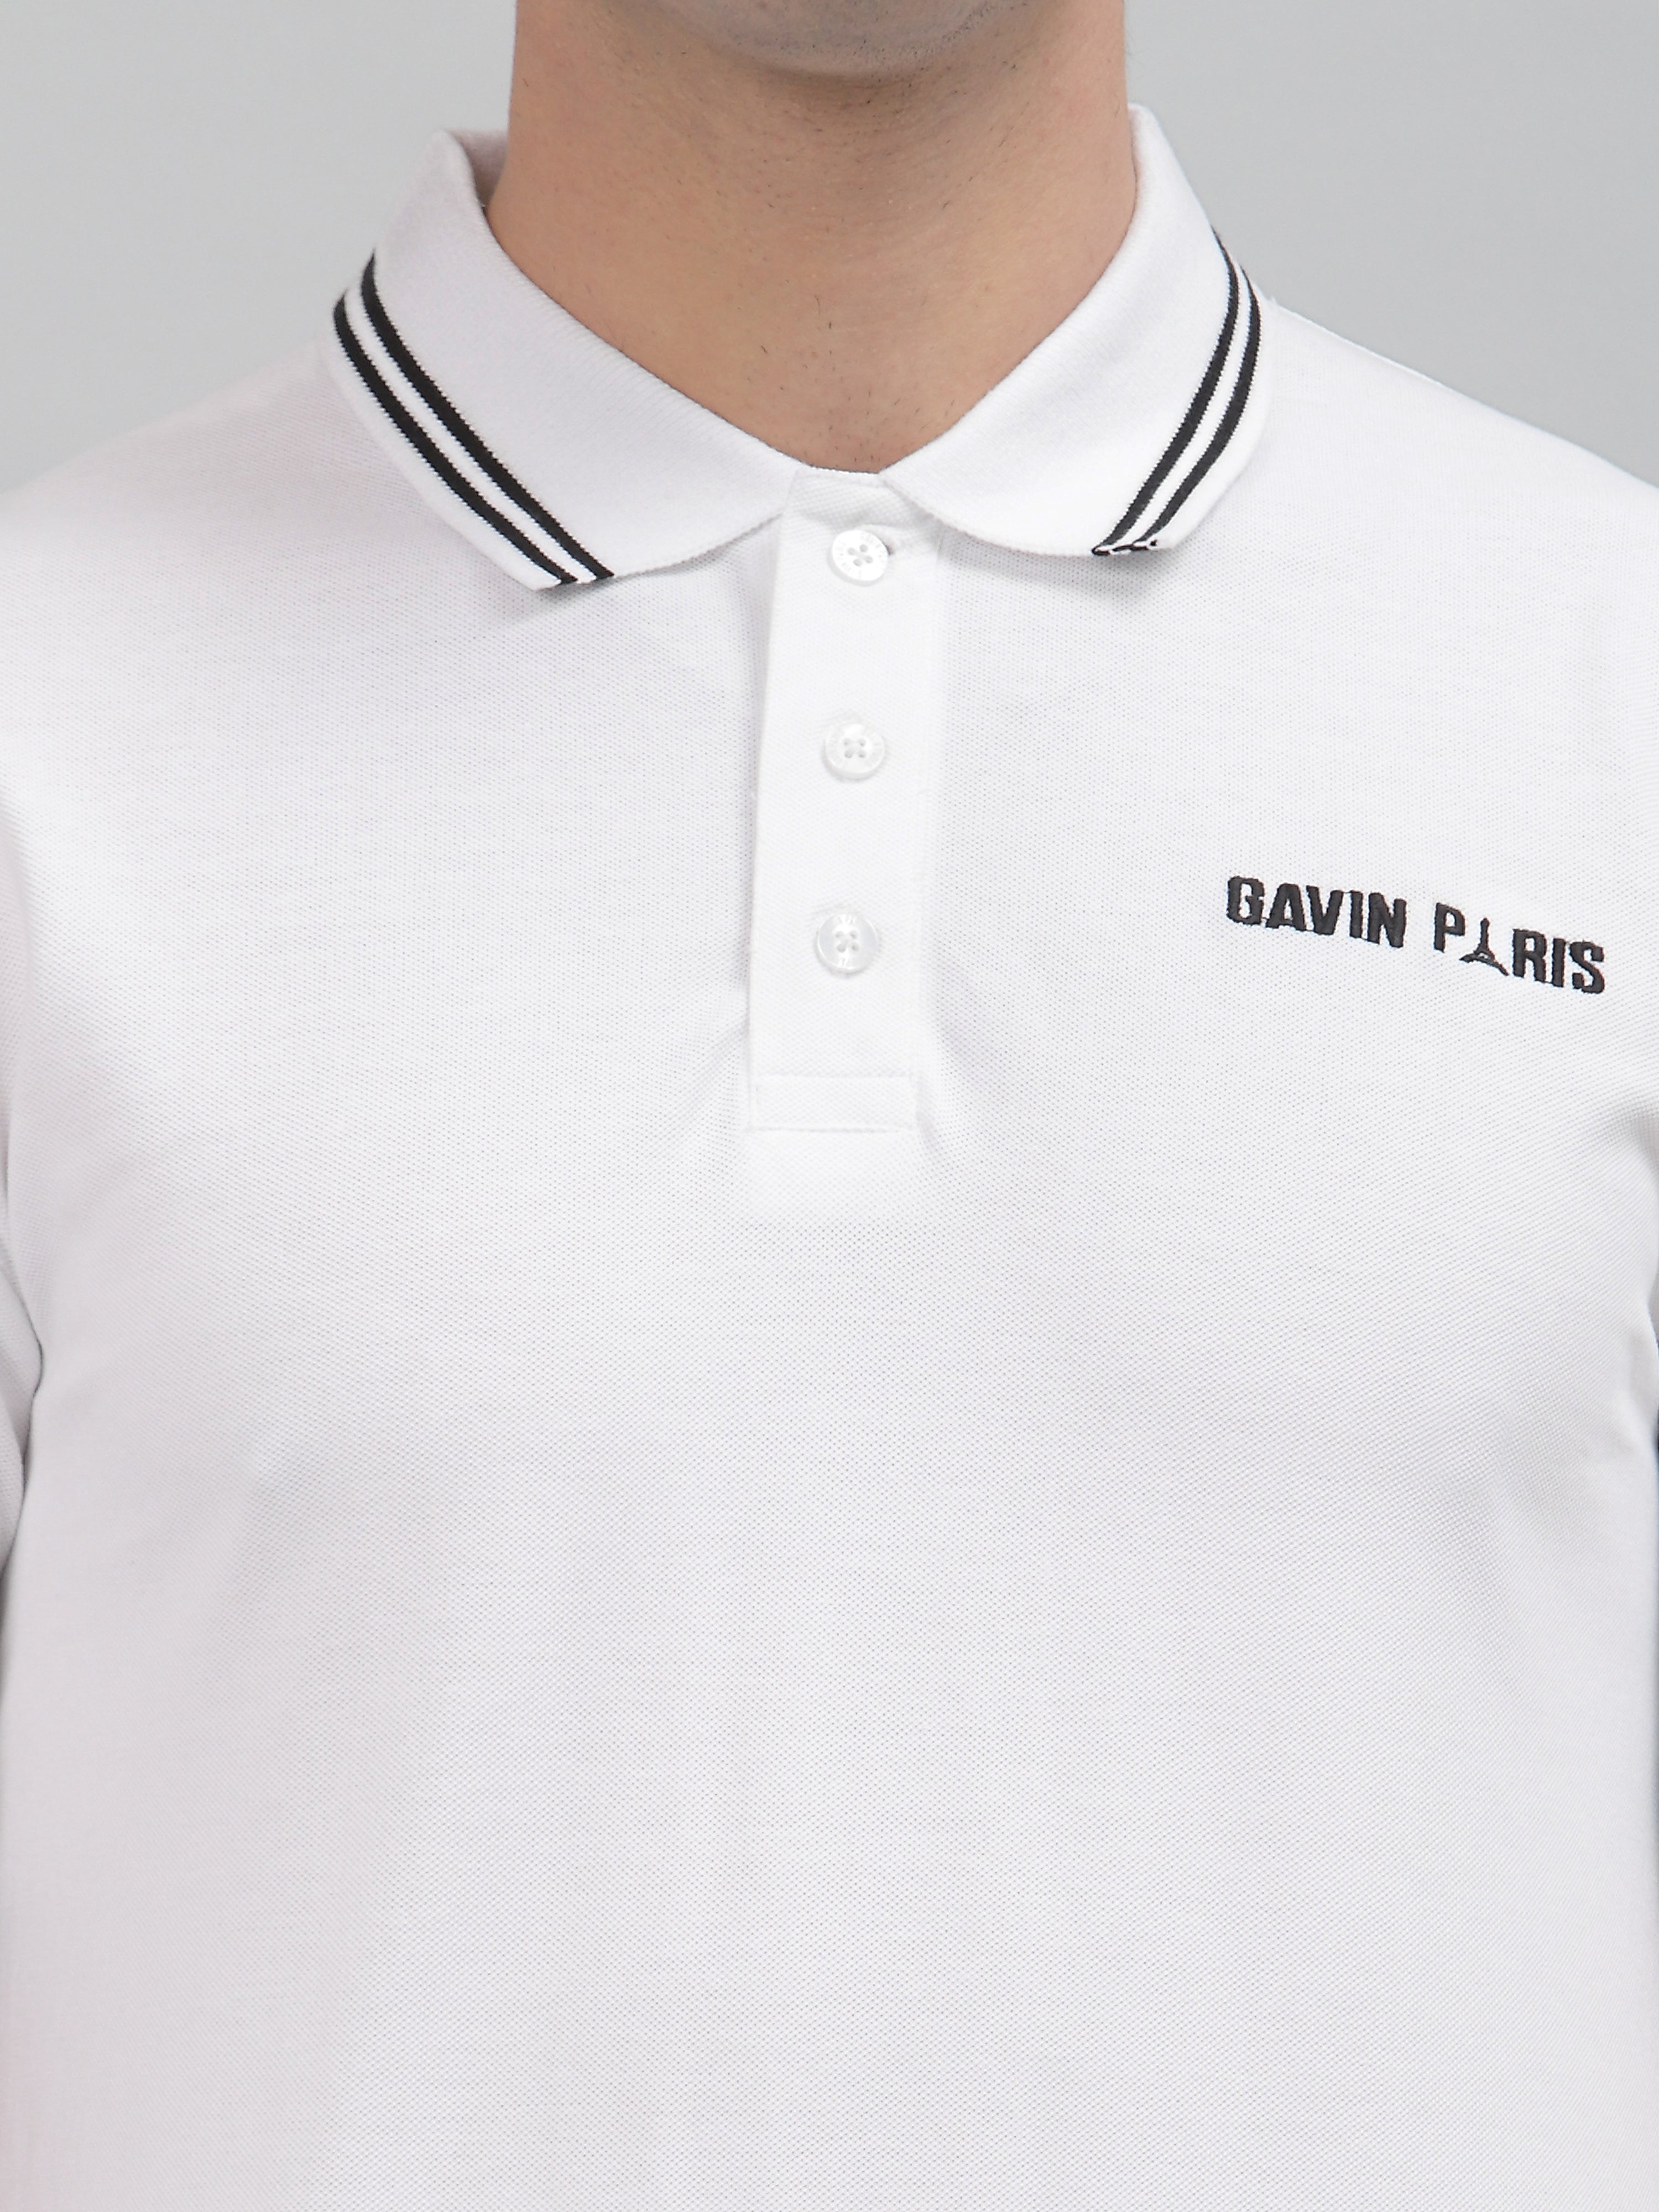 White Embroidered Pique Polo Shirt by Gavin Paris